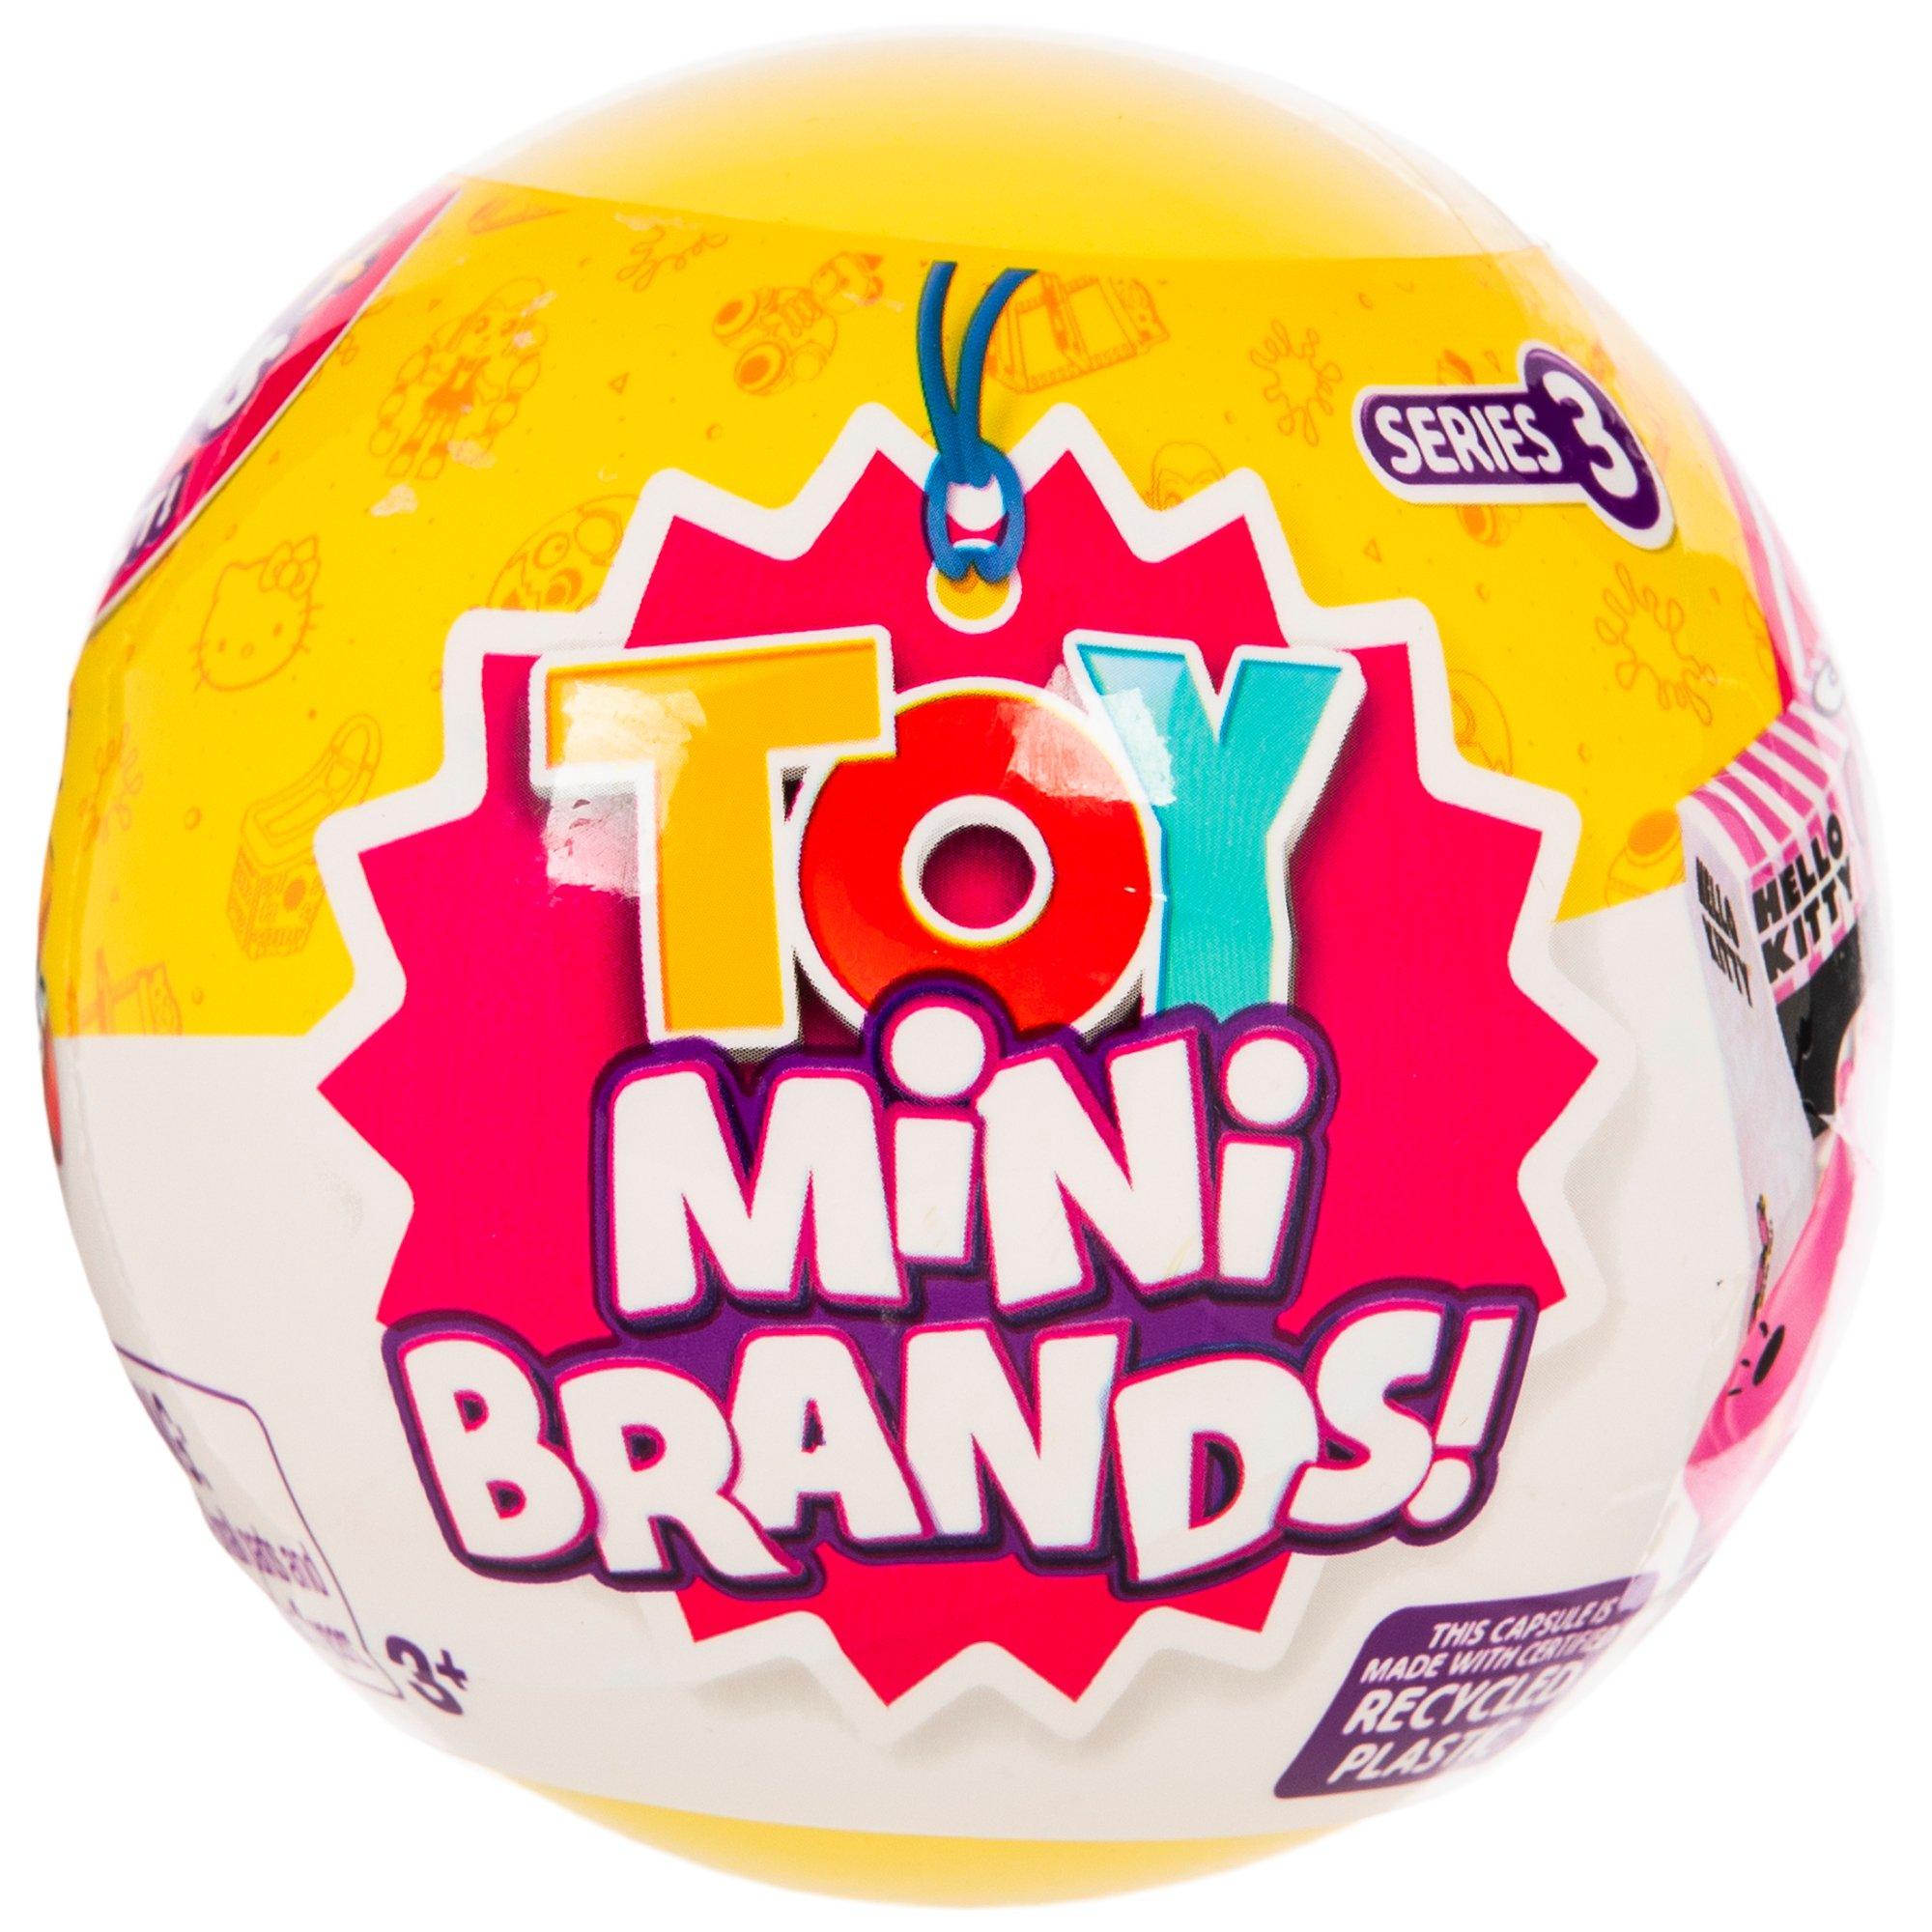 Toy Mini Brand 